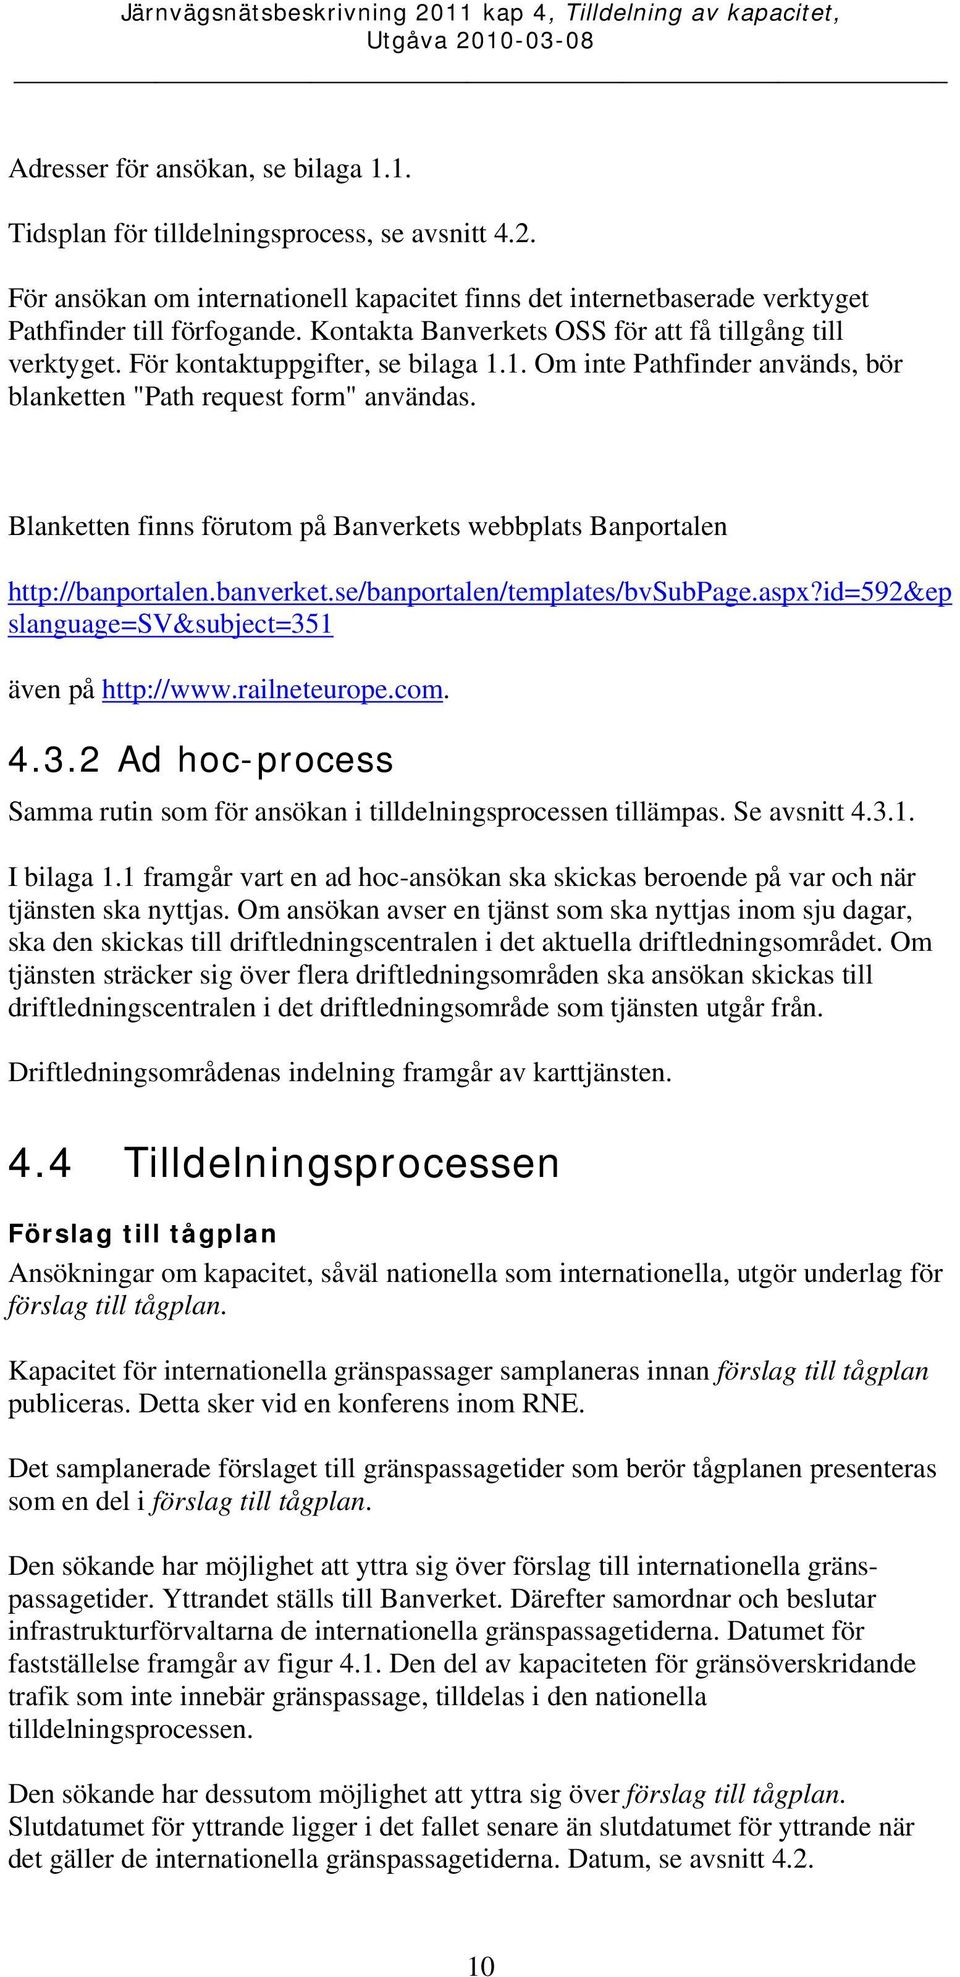 Blanketten finns förutom på Banverkets webbplats Banportalen http://banportalen.banverket.se/banportalen/templates/bvsubpage.aspx?id=592&ep slanguage=sv&subject=351 även på http://www.railneteurope.